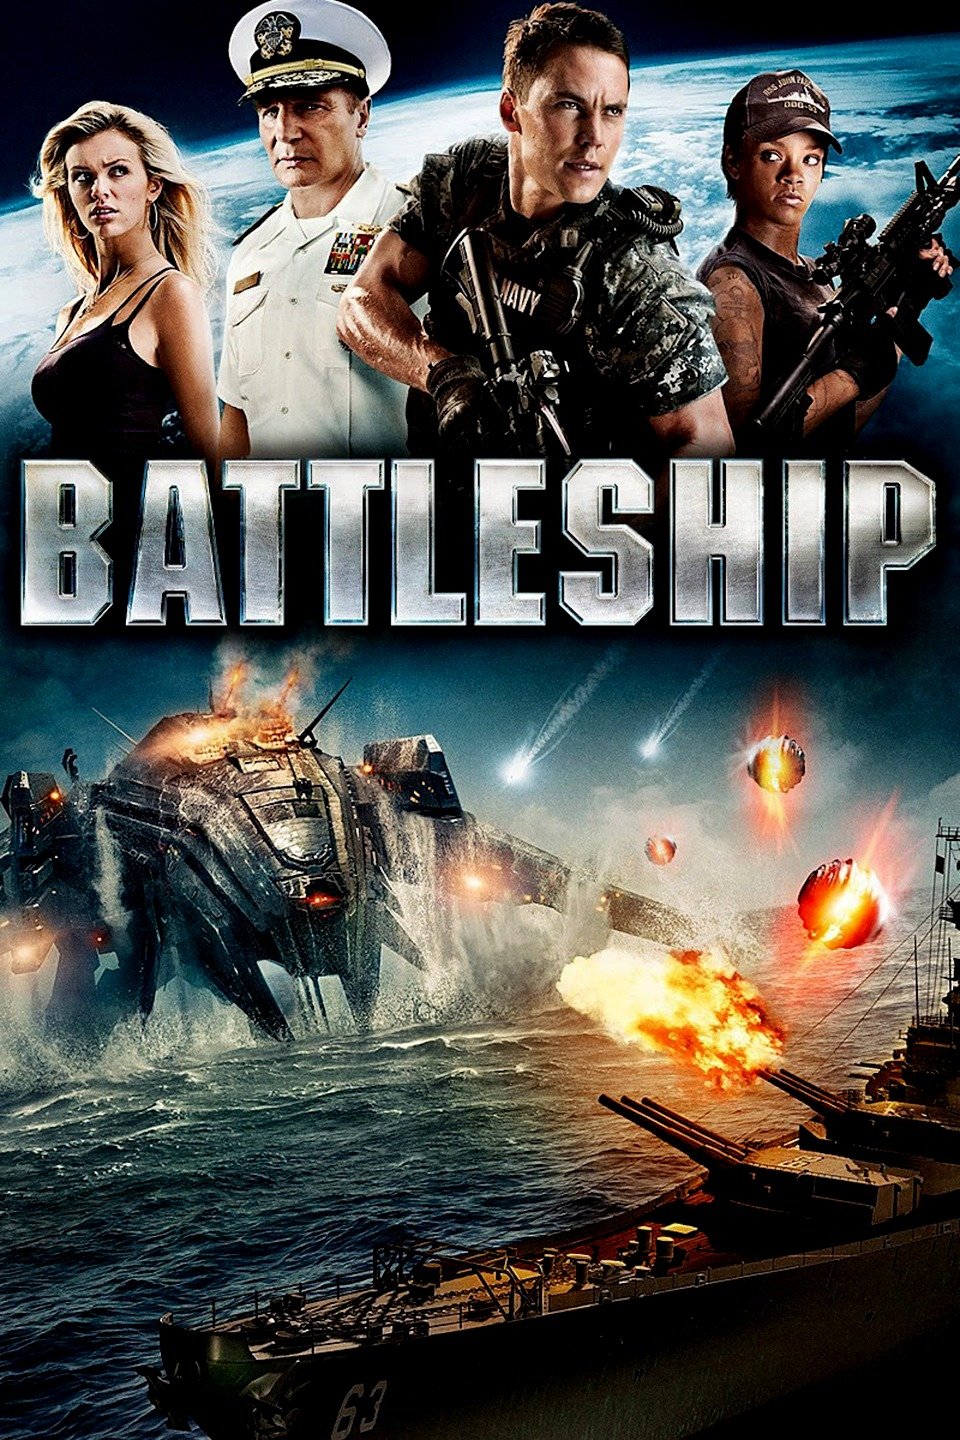 [MINI-HD] Battleship (2012) แบทเทิลชิป ยุทธการเรือรบพิฆาตเอเลี่ยน [1080p] [พากย์ไทย 5.1 + อังกฤษ DTS] [บรรยายไทย + อังกฤษ] [เสียงไทย + ซับไทย] [ONE2UP]